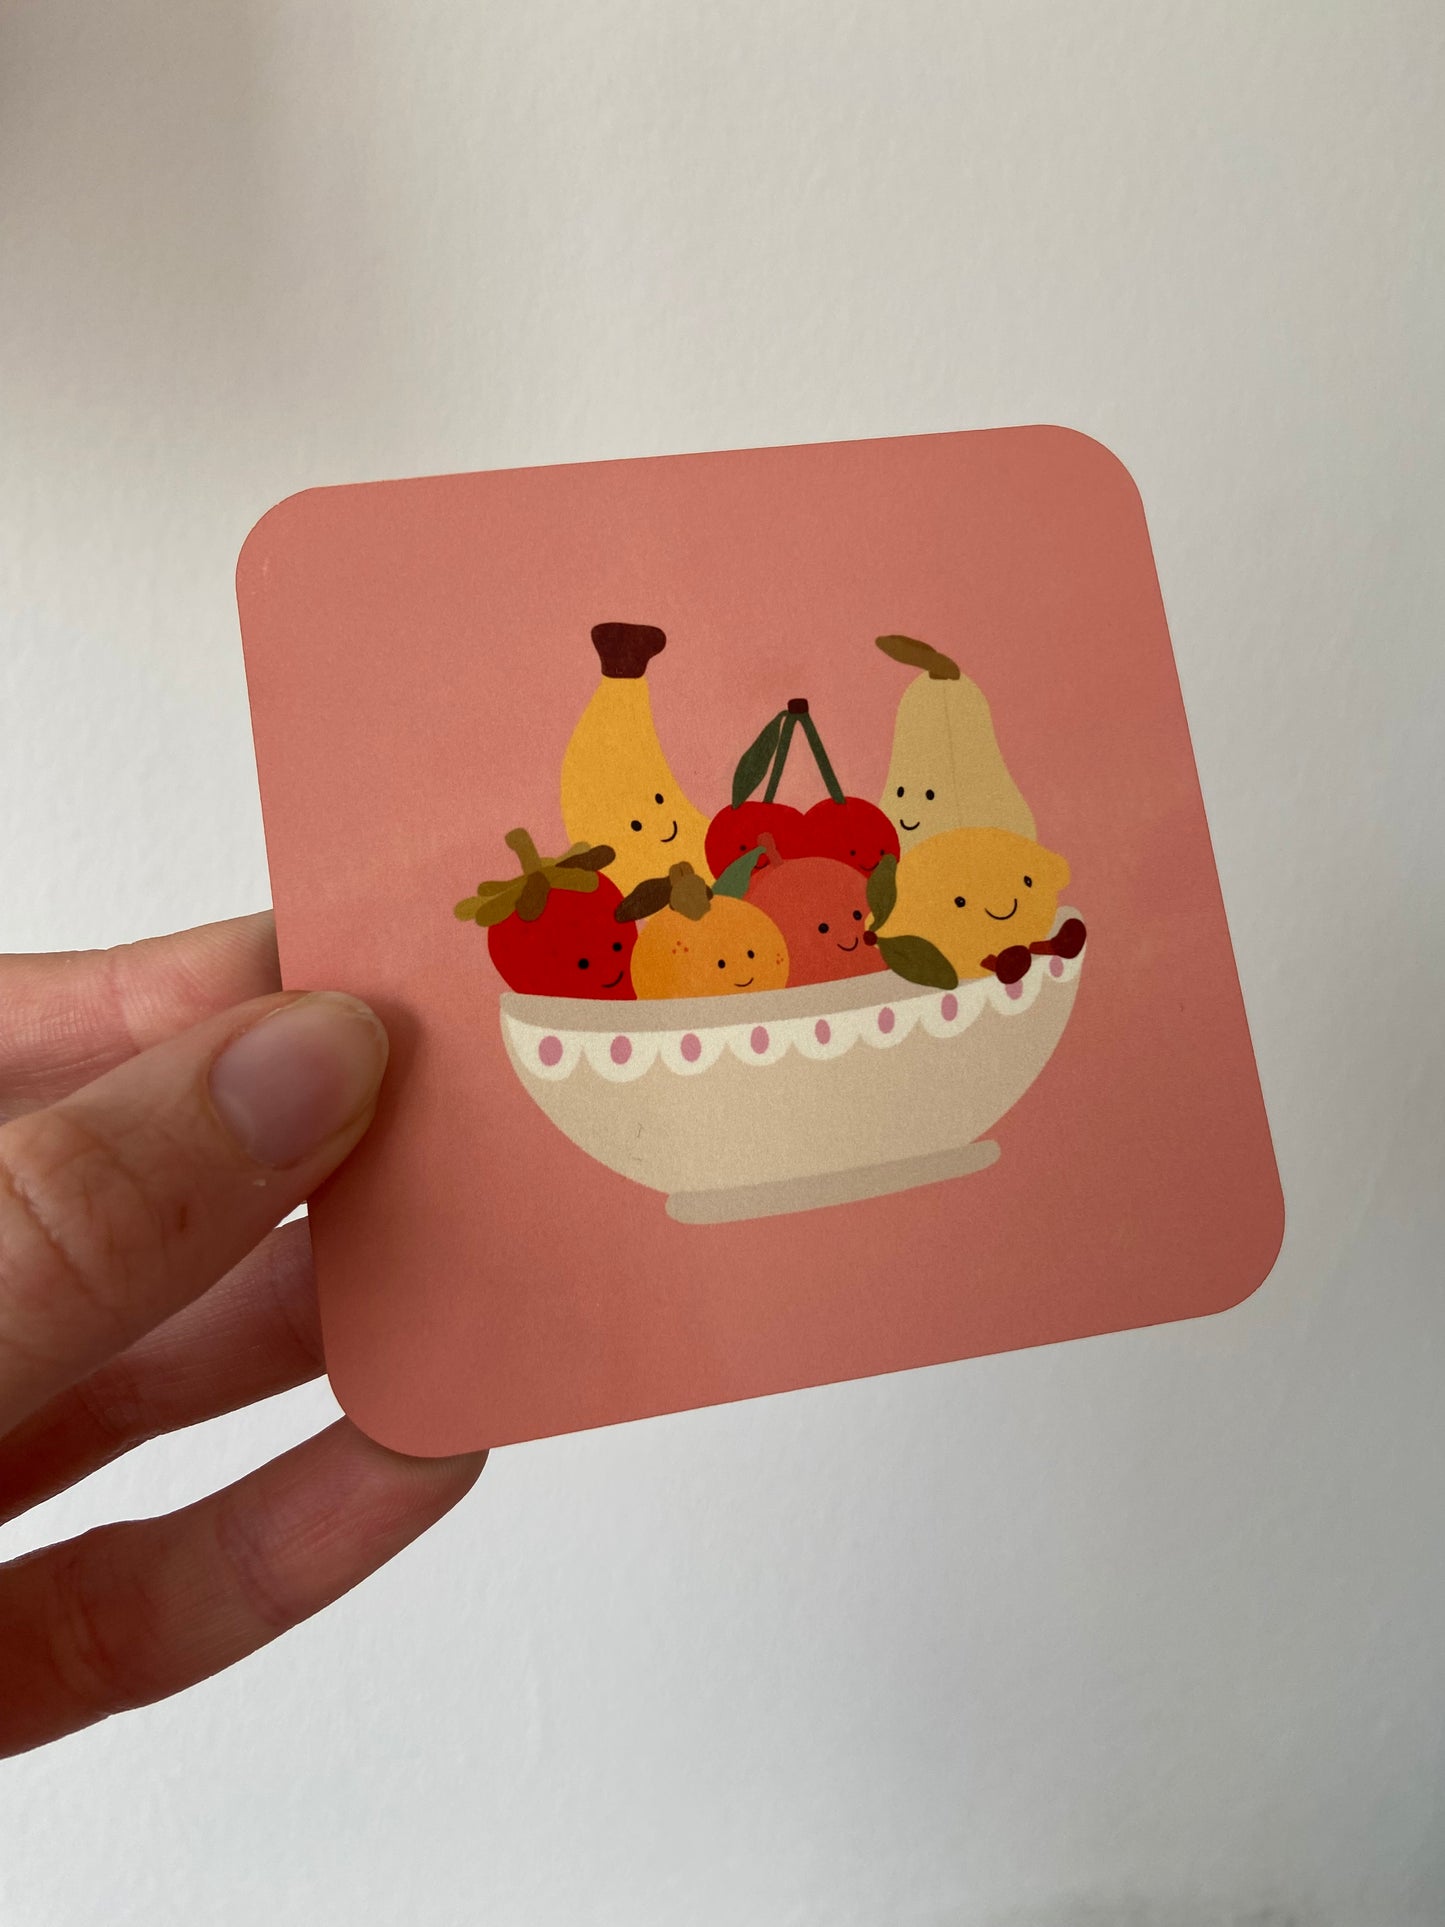 Fruit bowl coaster. Individual or set of 4